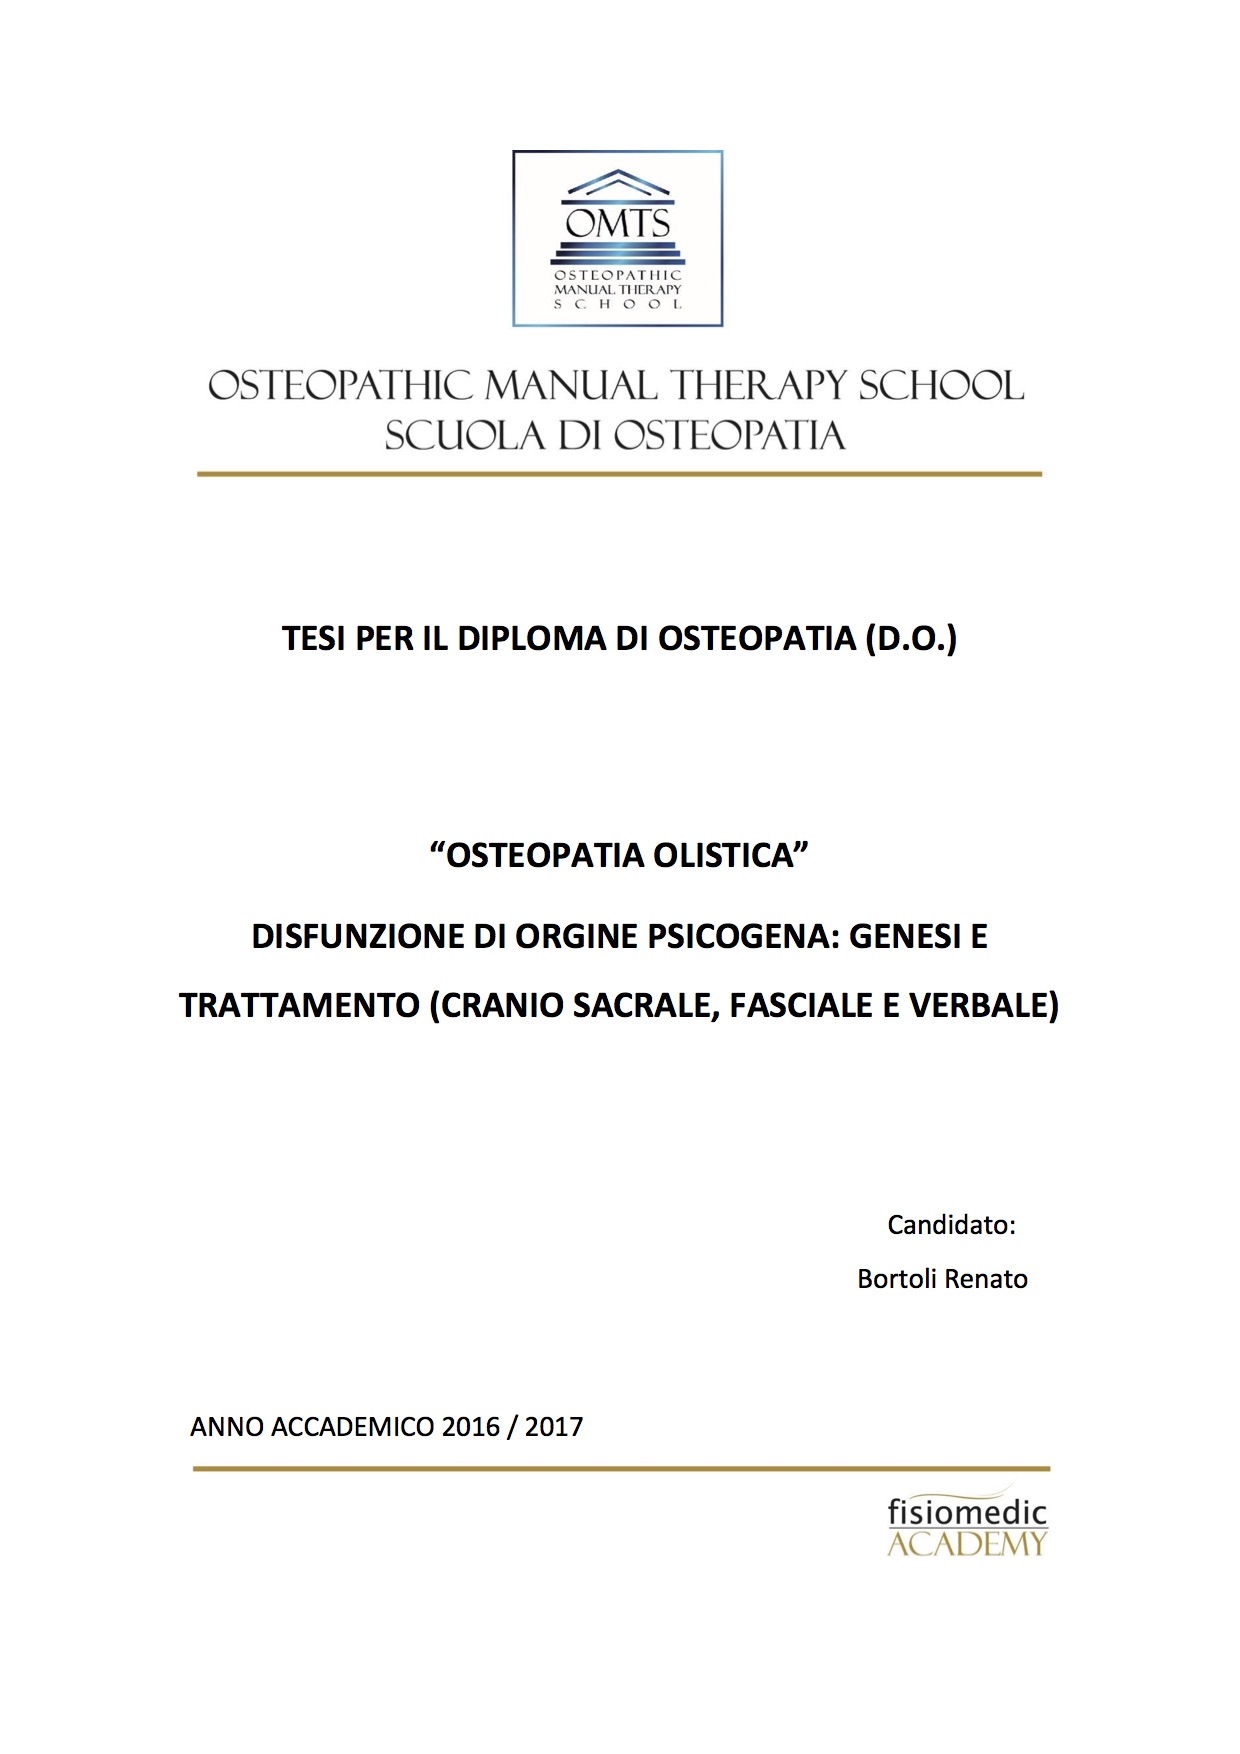 Renato Bortoli Tesi Diploma Osteopatia 2017